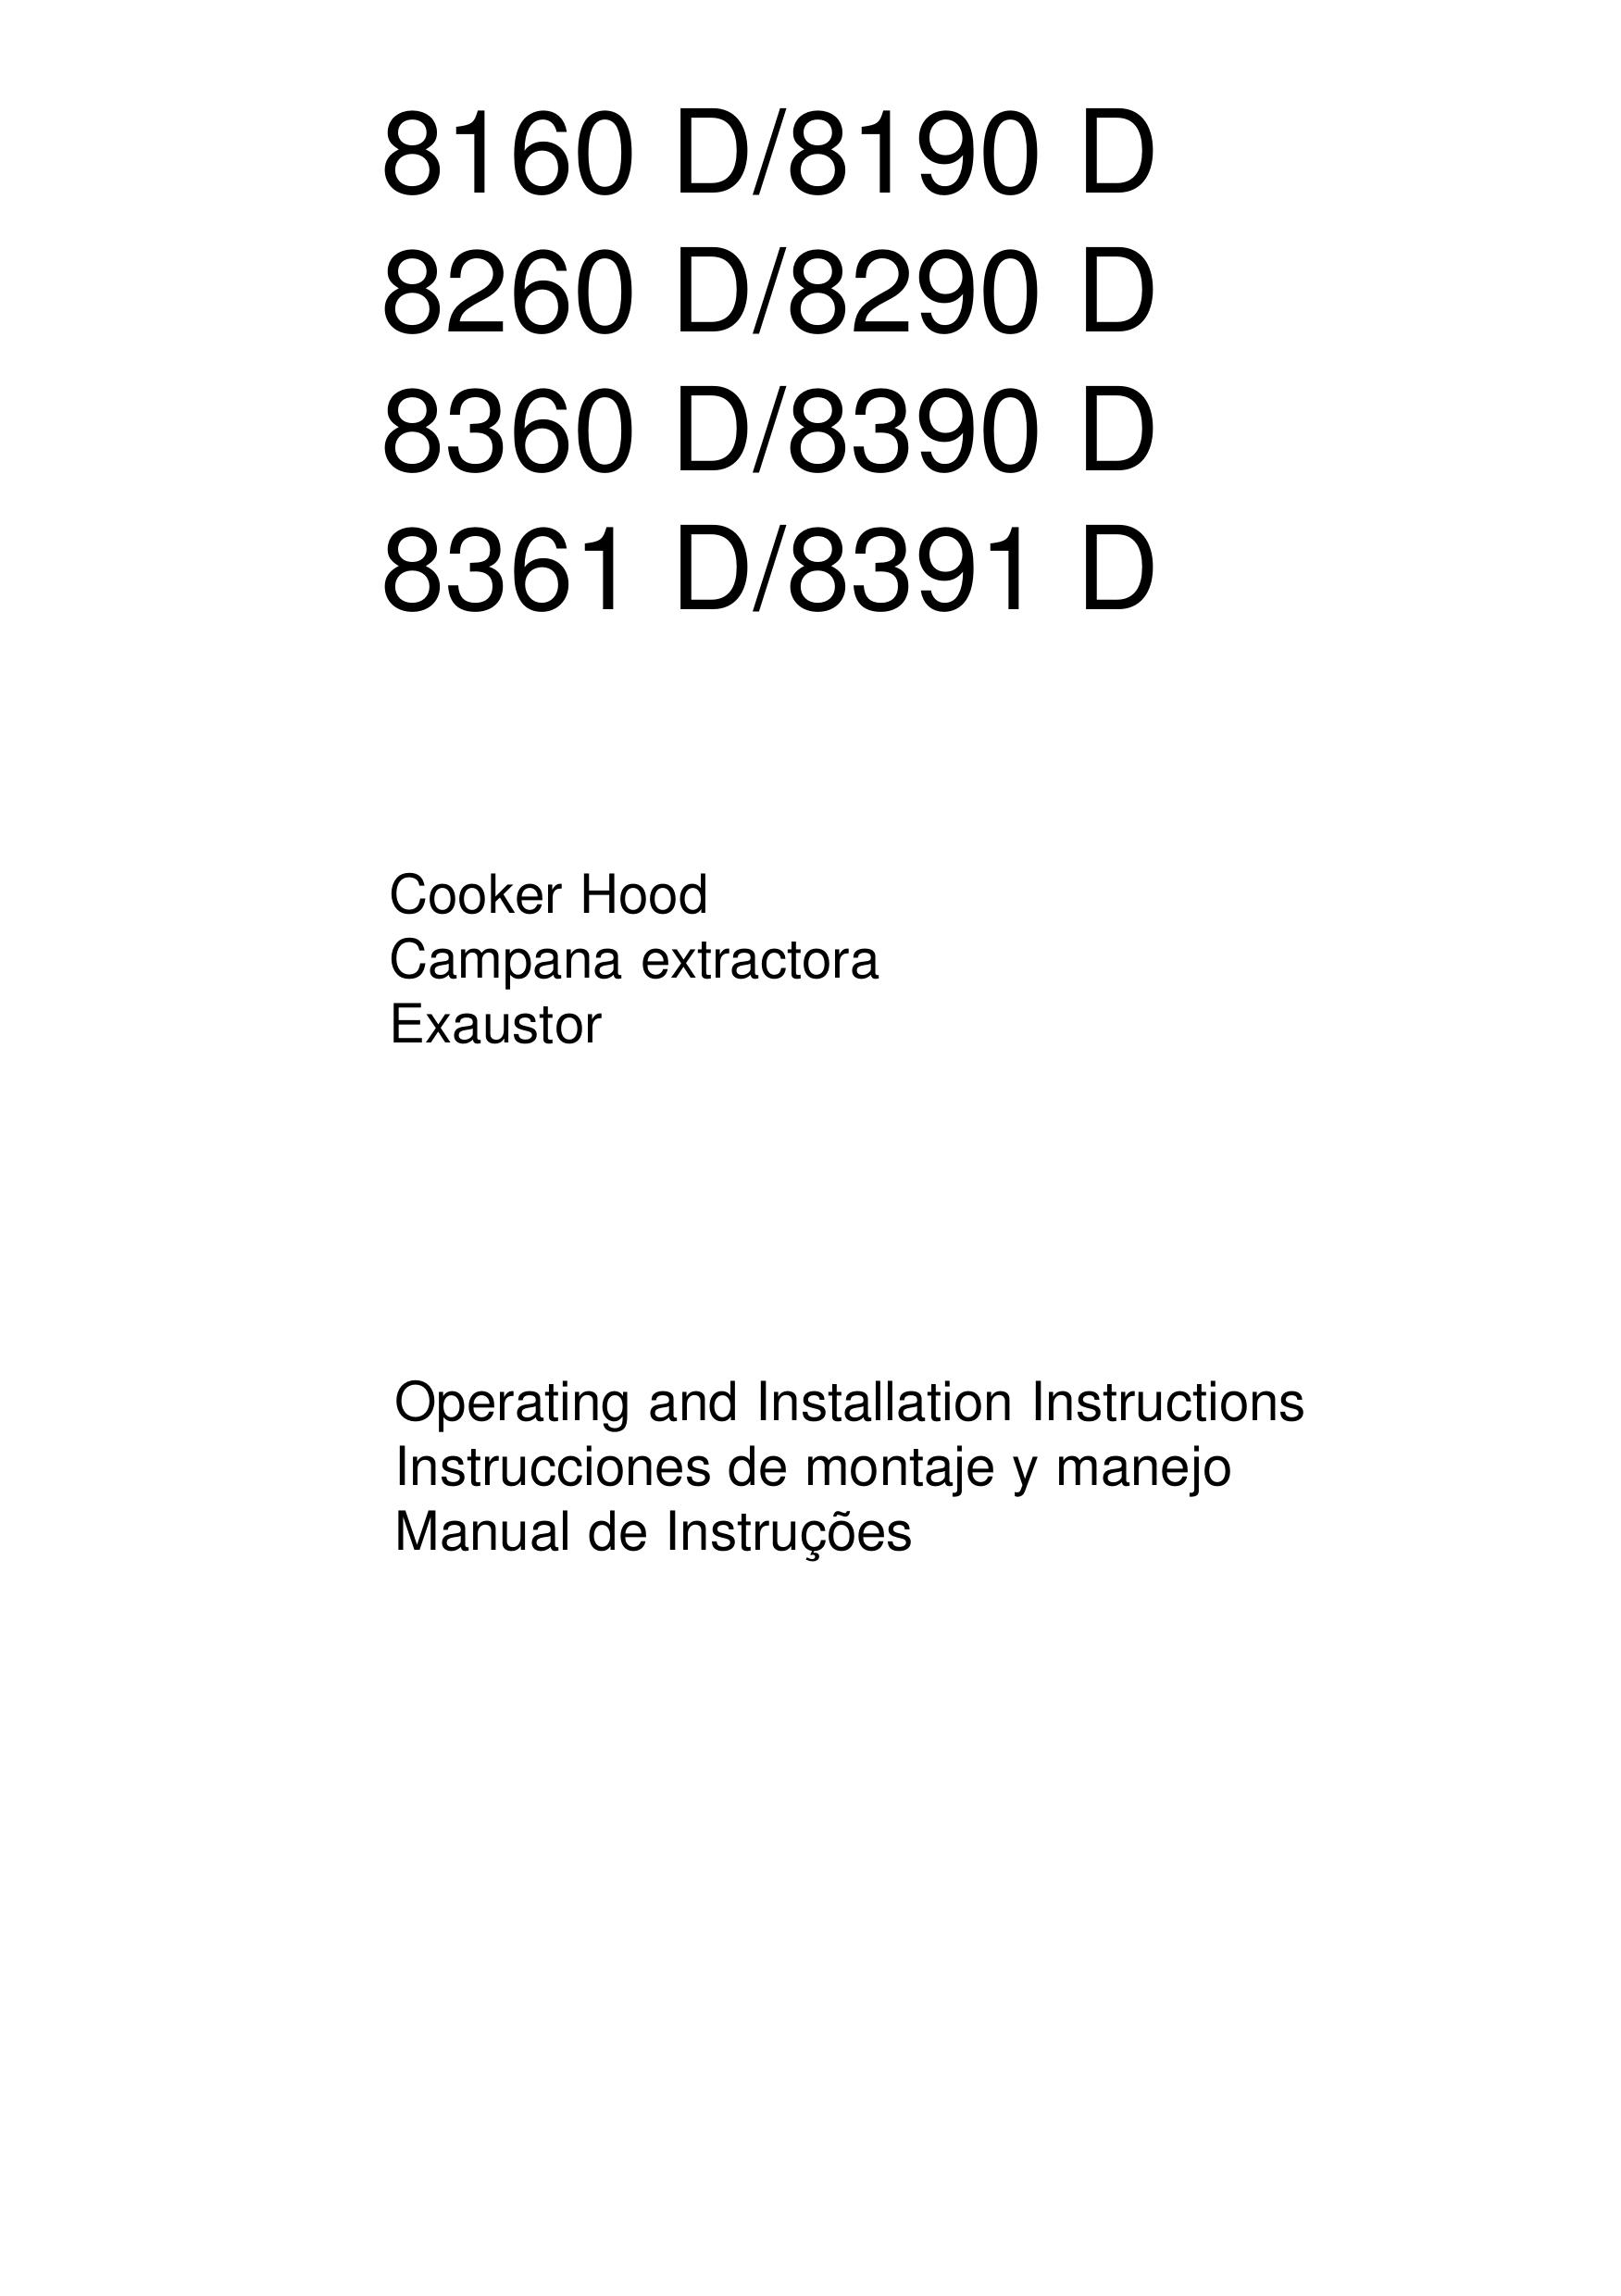 AEG 8391 D Ventilation Hood User Manual